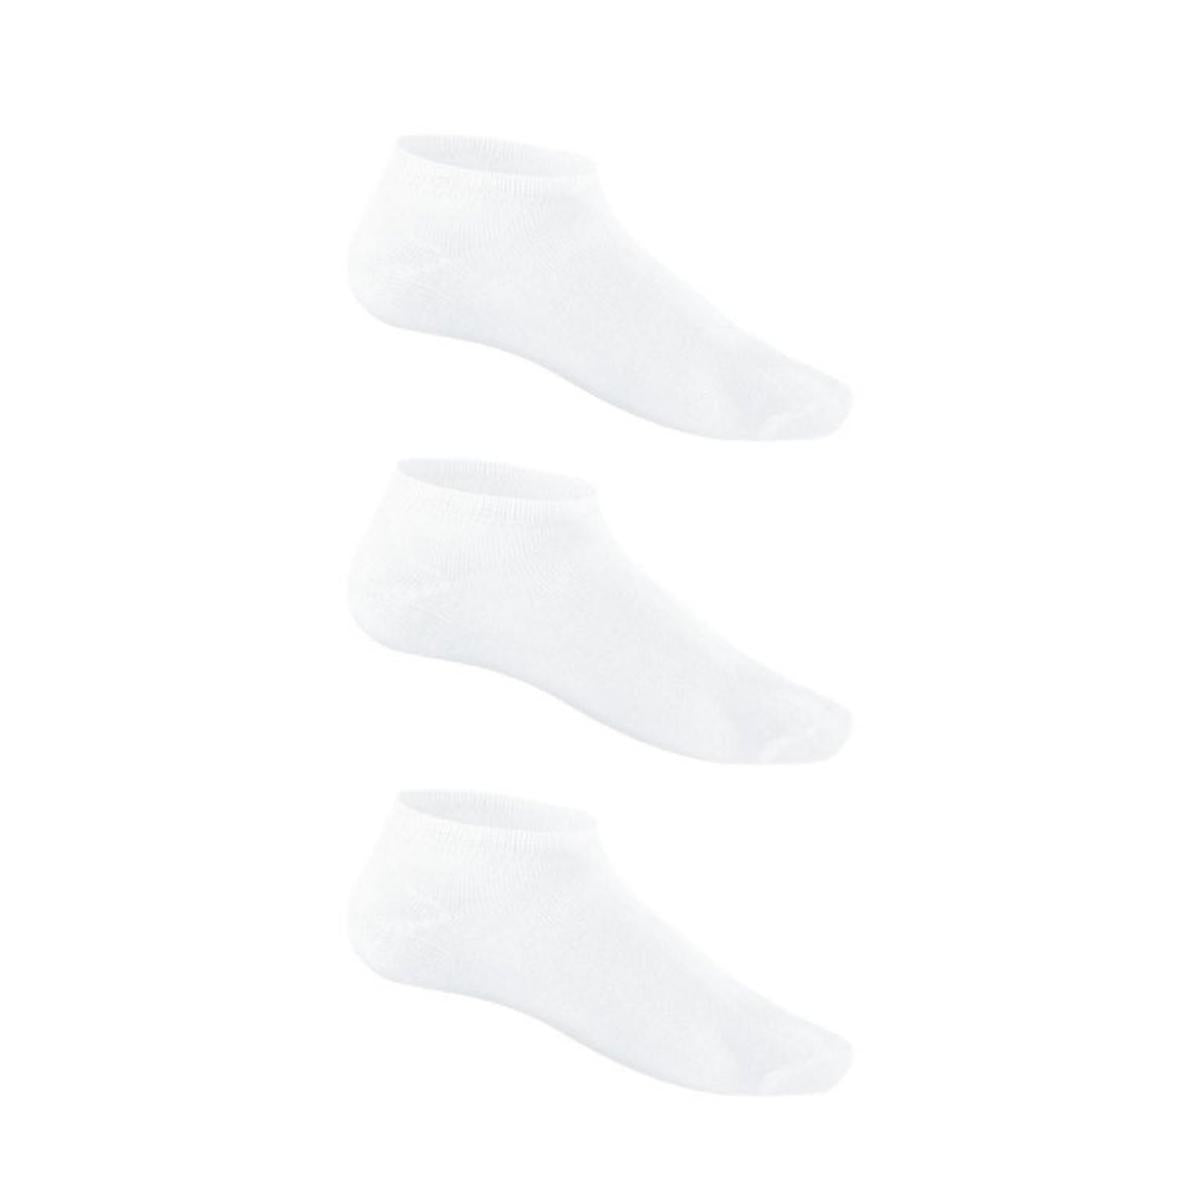 Ladies size 5-8 / White - CalmCare 3 PACK Sensory Ankle Socks | Adult - Socks - CalmCare